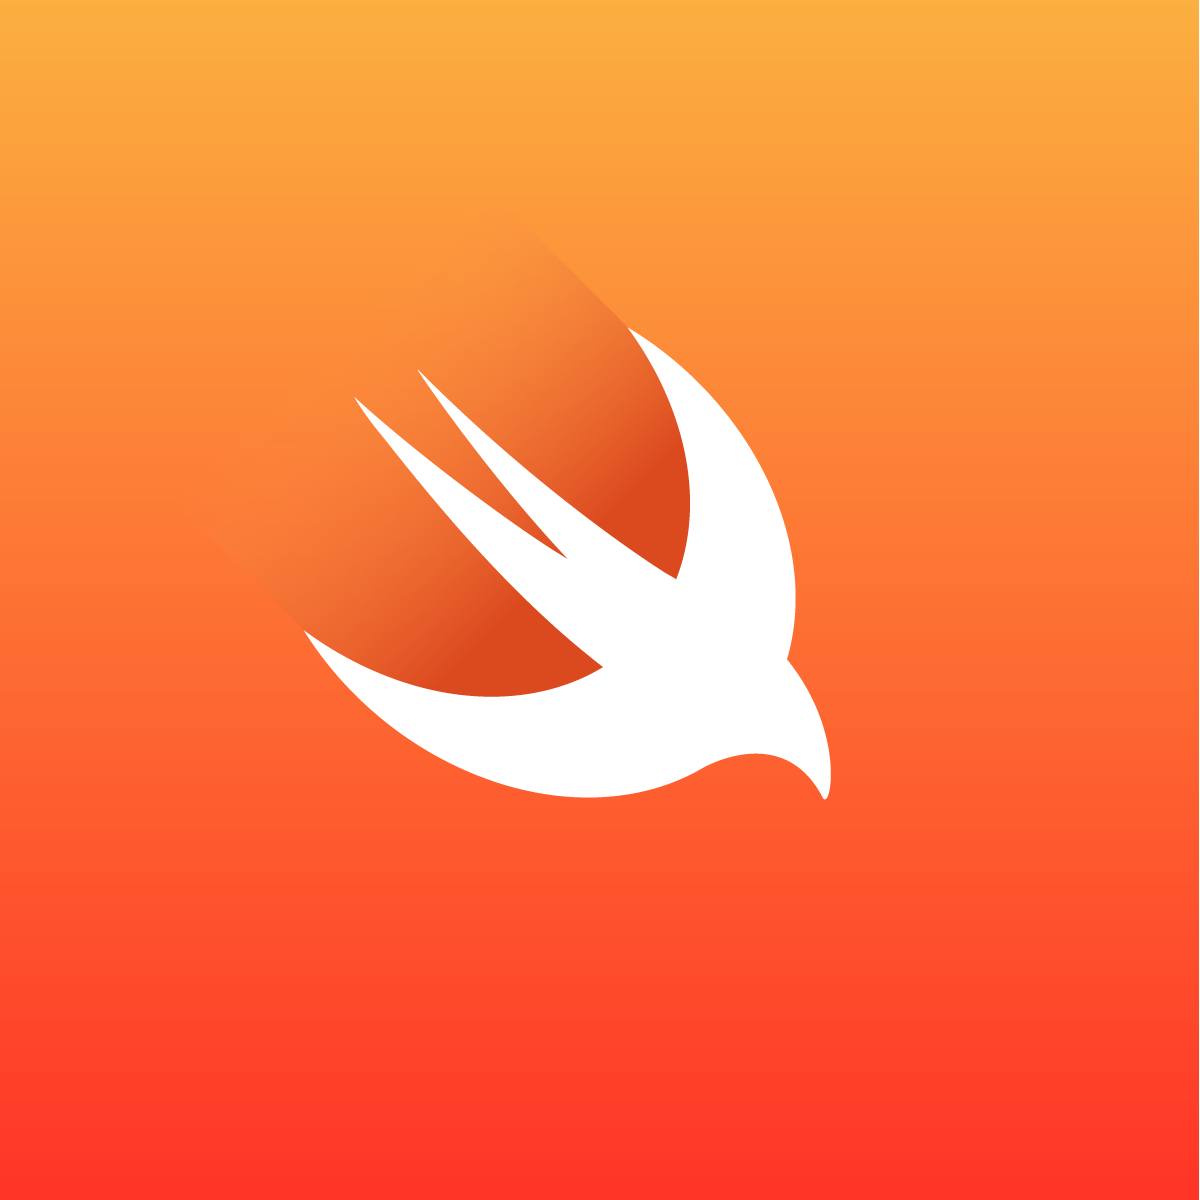 Swift programming language - Bluebird